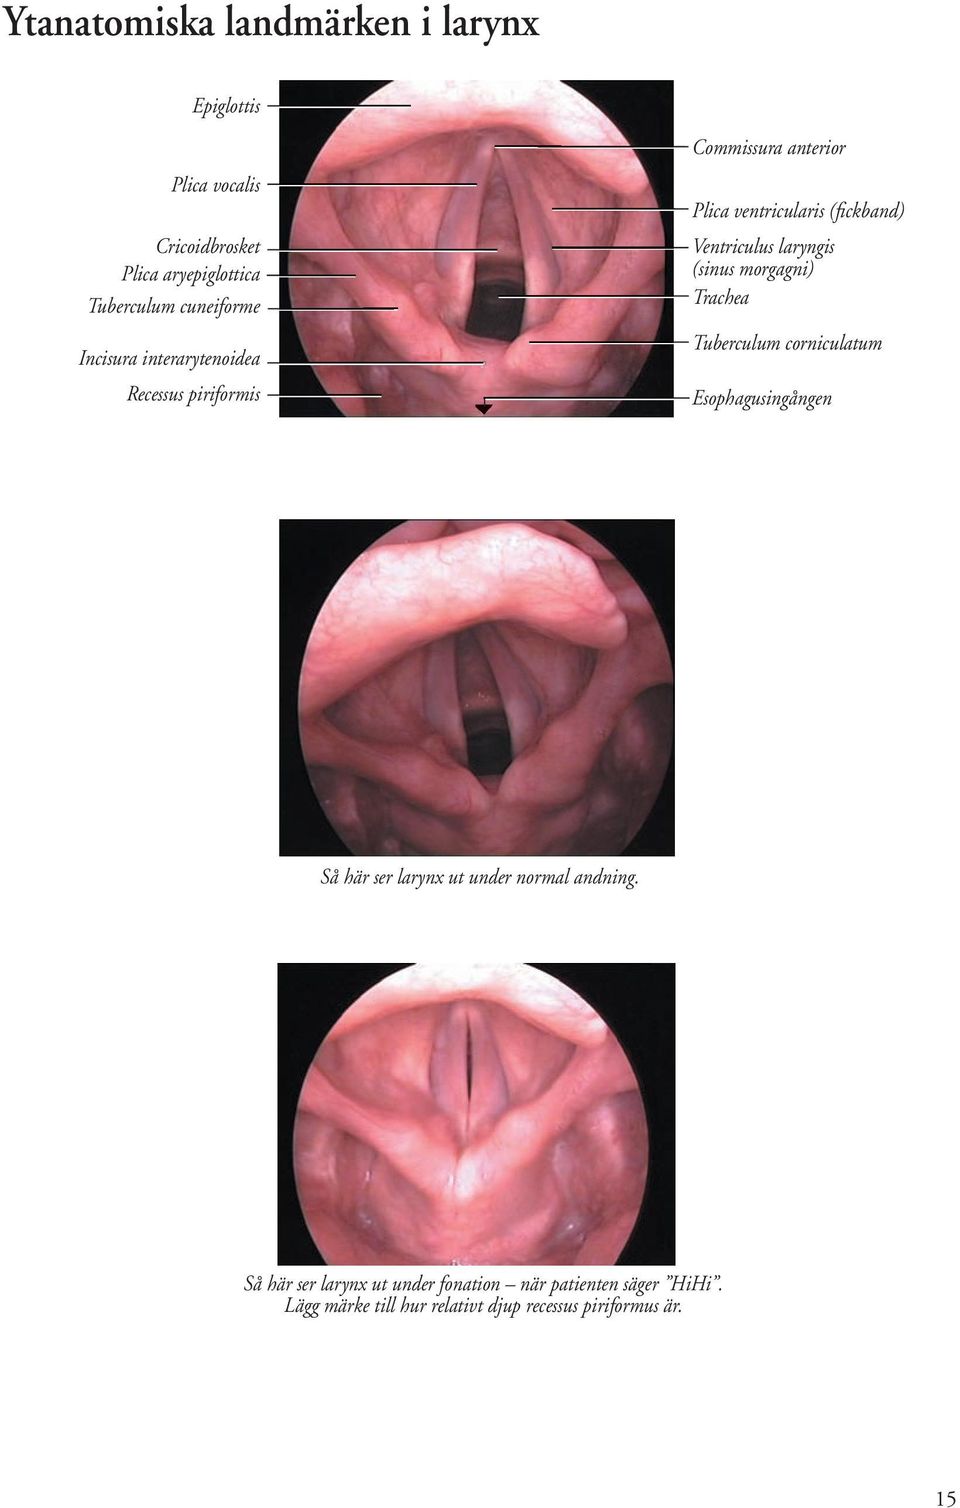 laryngis (sinus morgagni) Trachea Tuberculum corniculatum Esophagusingången Så här ser larynx ut under normal